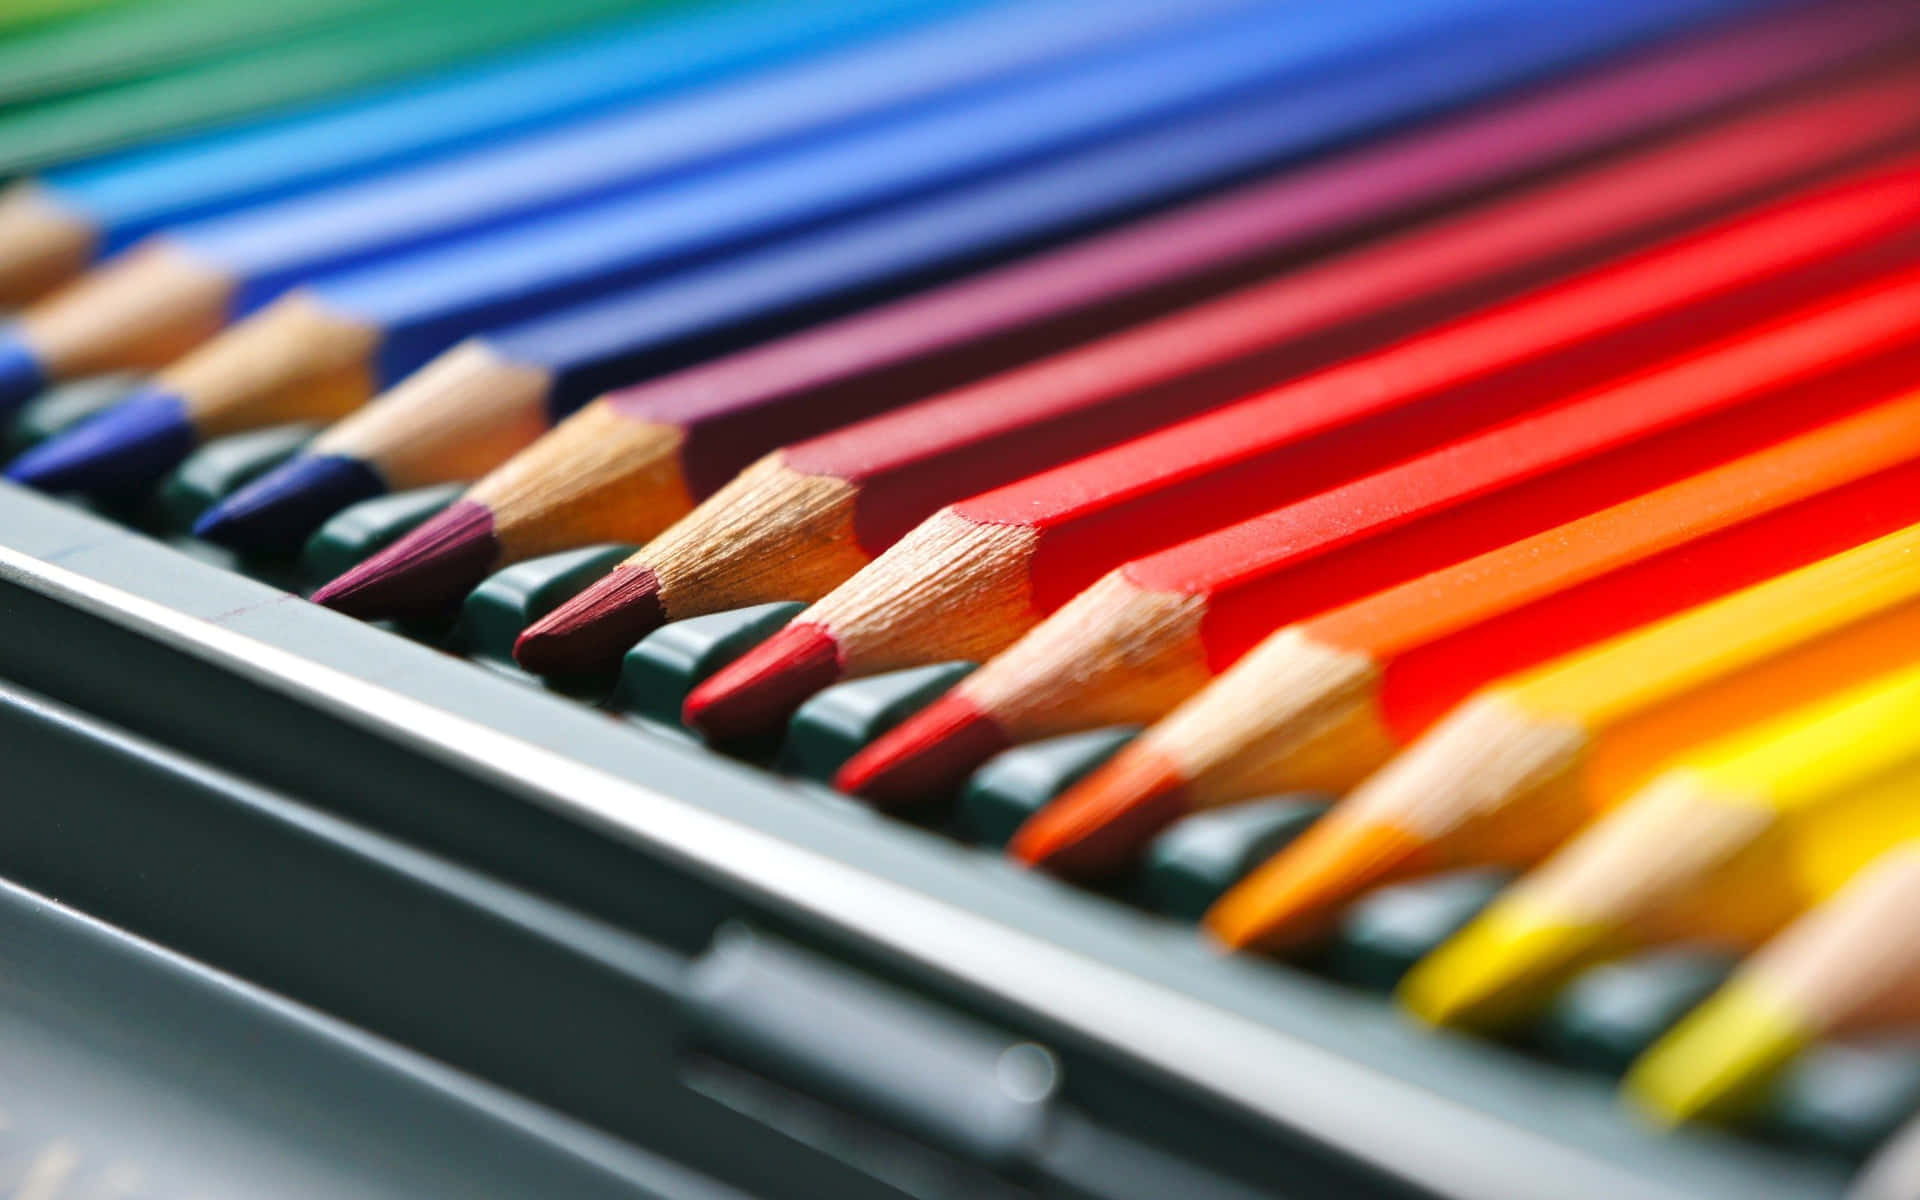 Wooden Pencil Spilling Colored Pencils